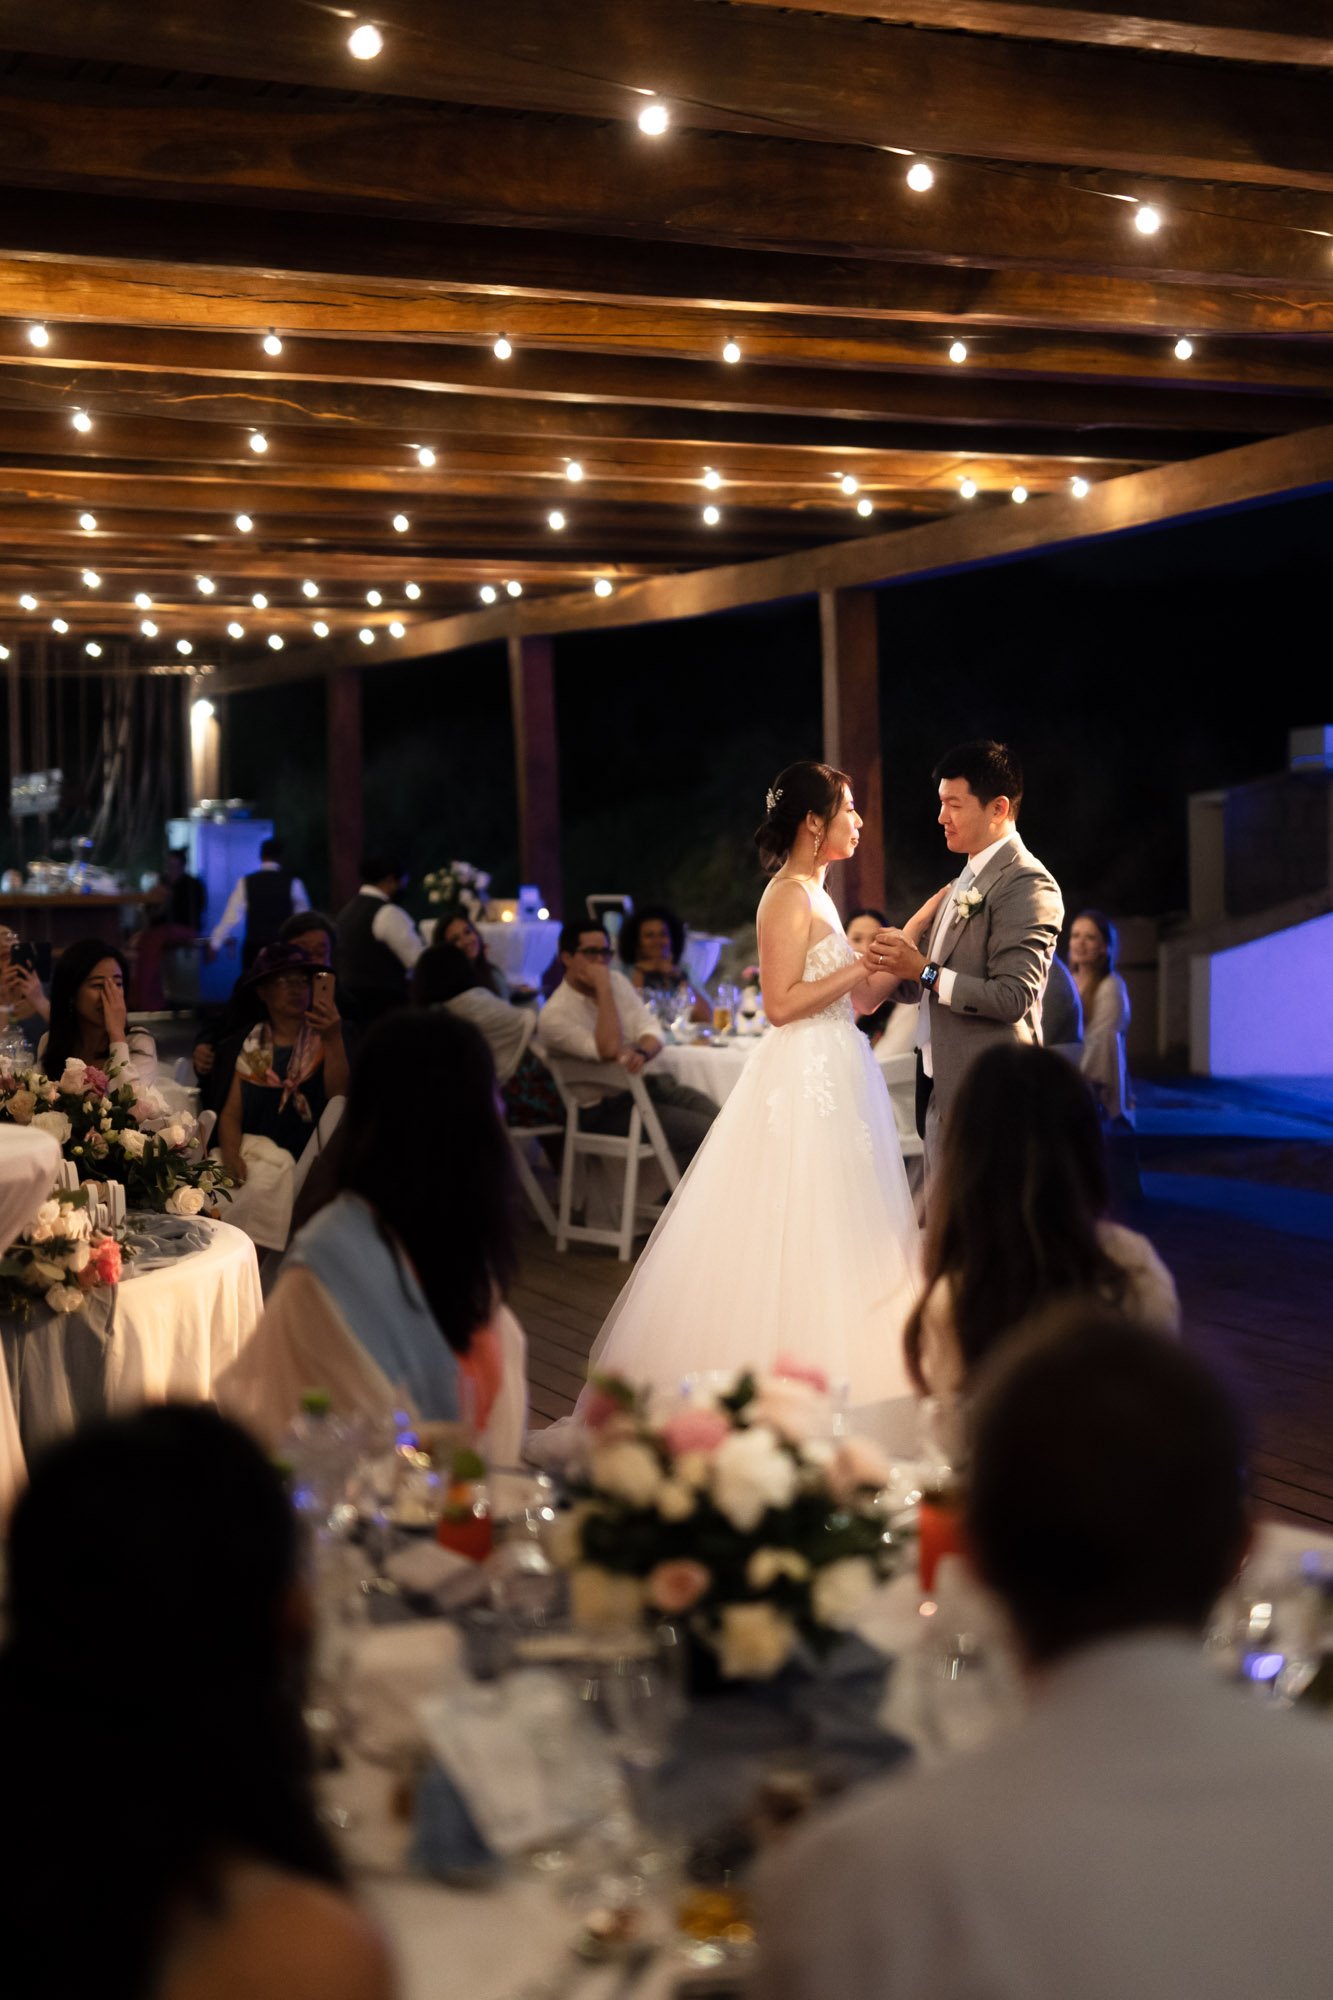 Kevin Sunny Wedding - Reception - 21.jpg